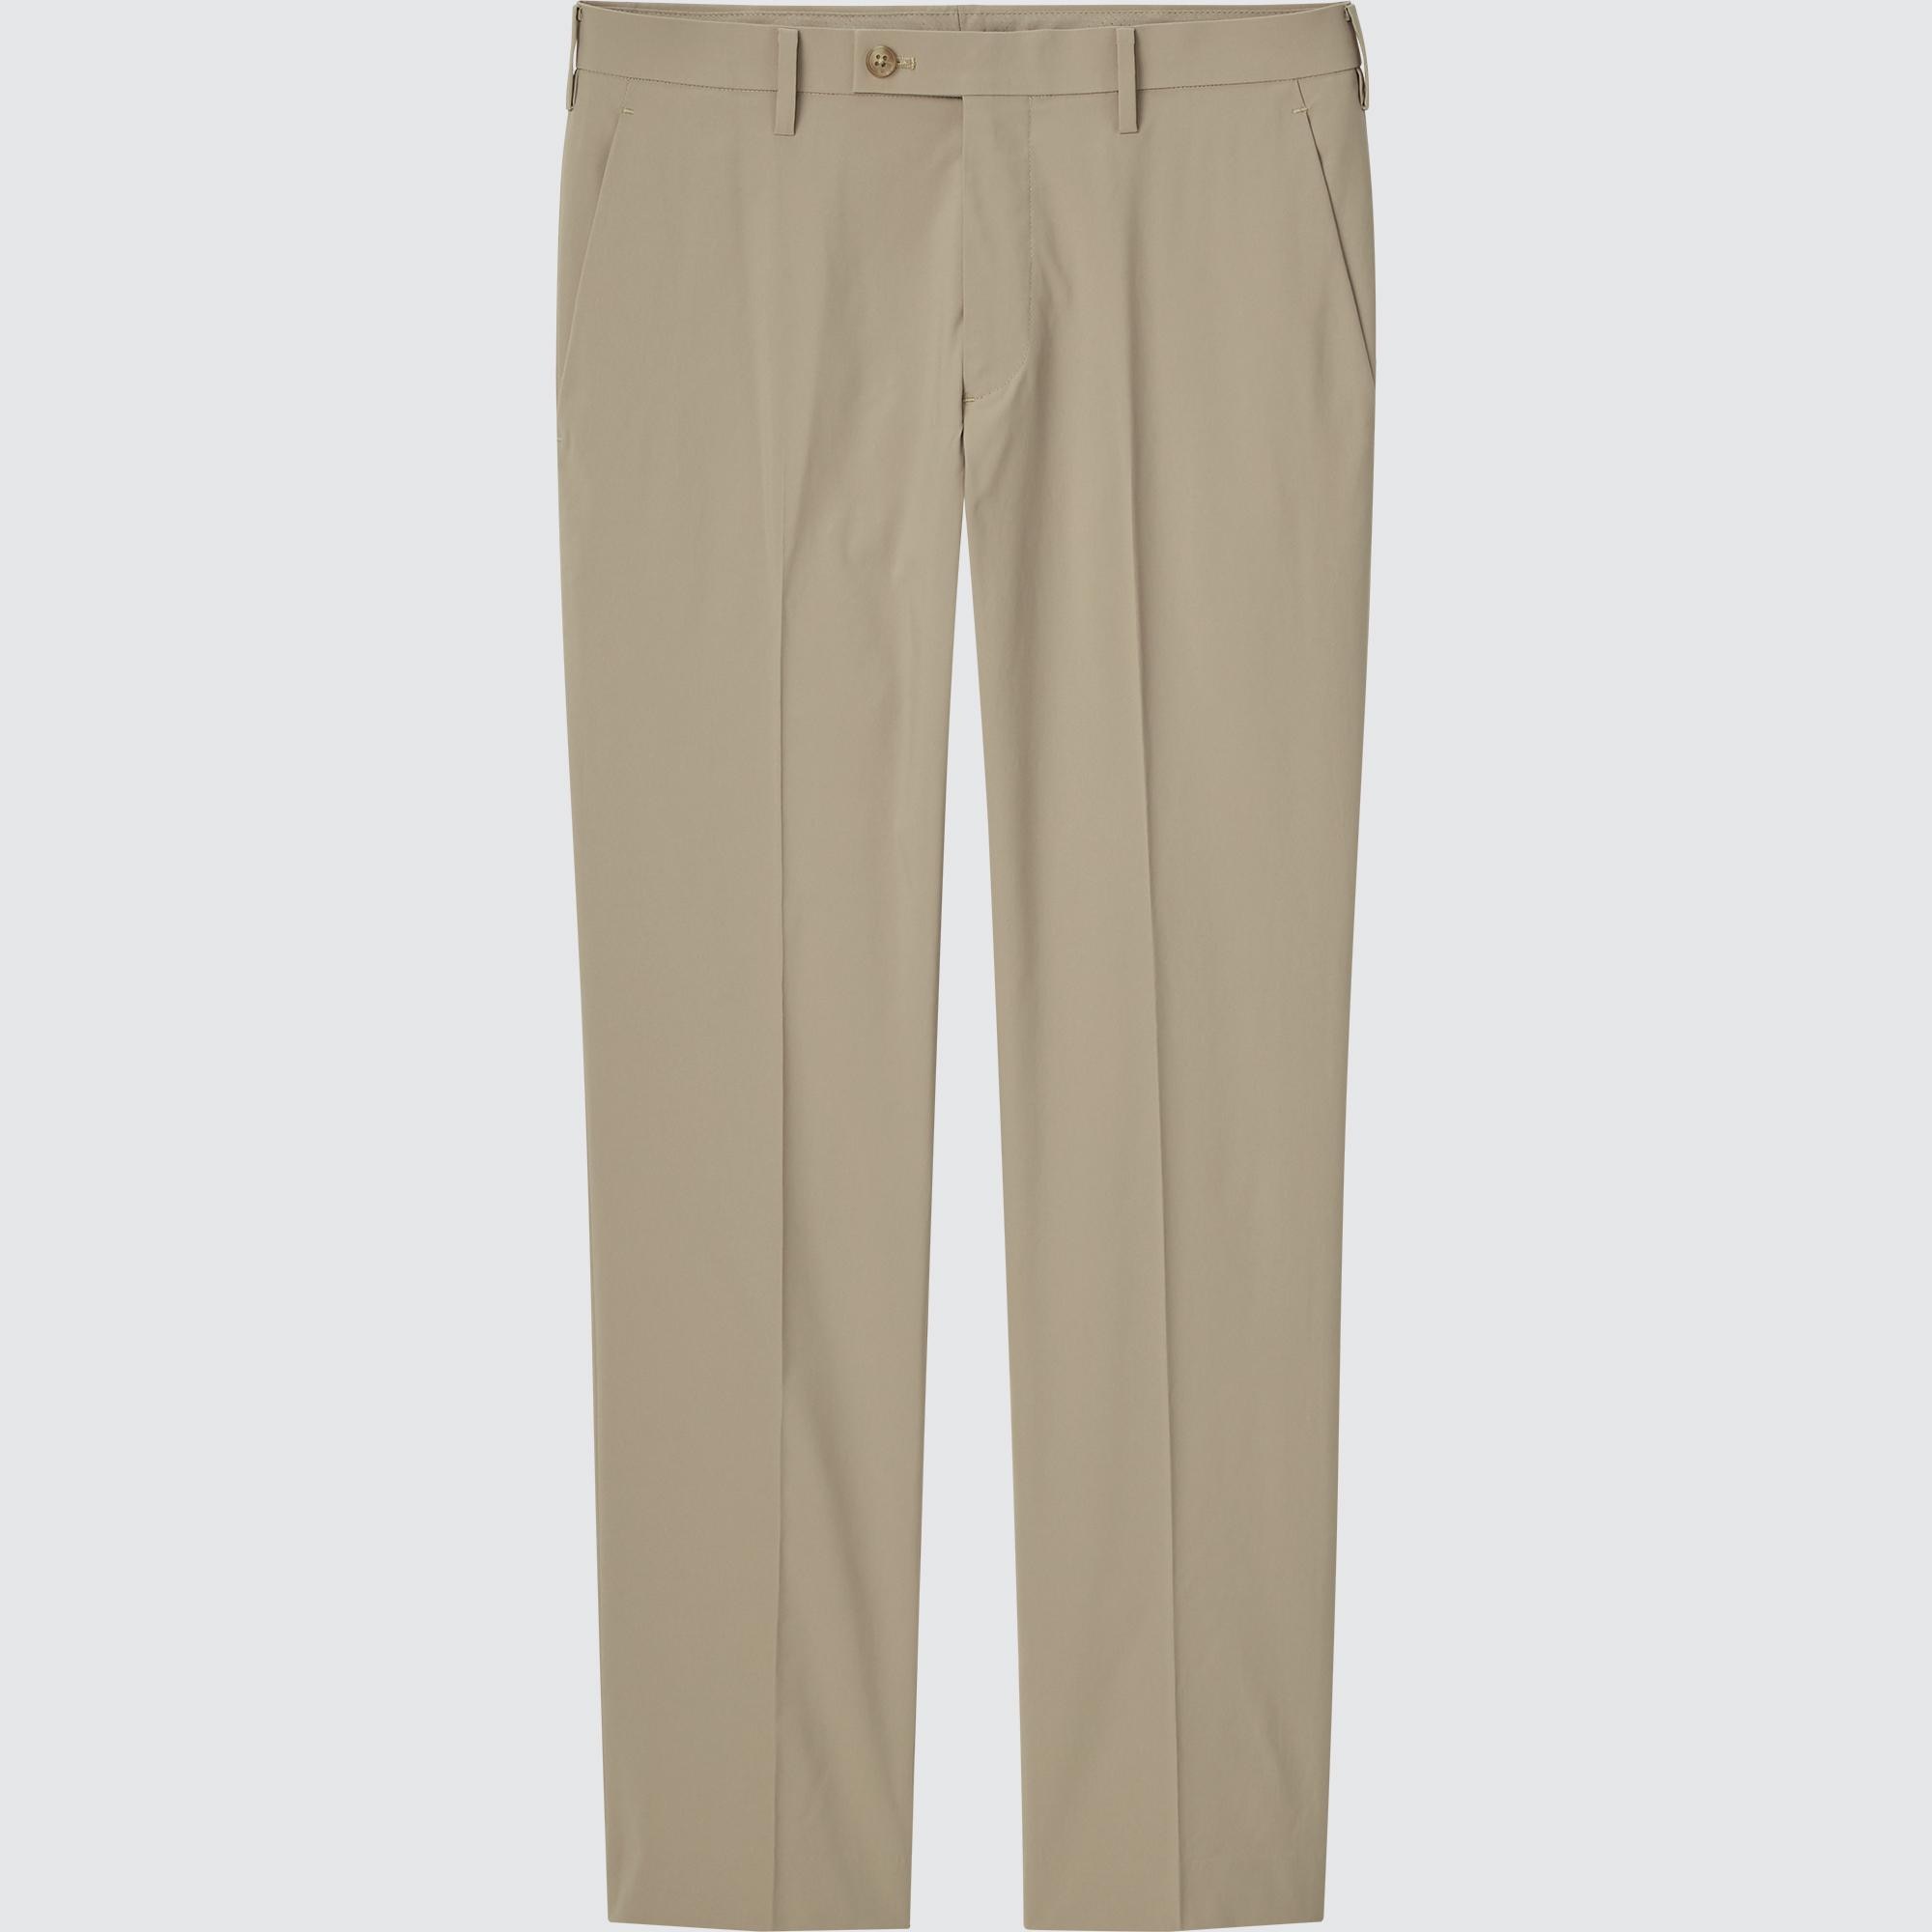 Reviews for AirSense Pants (Ultra Light Pants) (Cotton Like